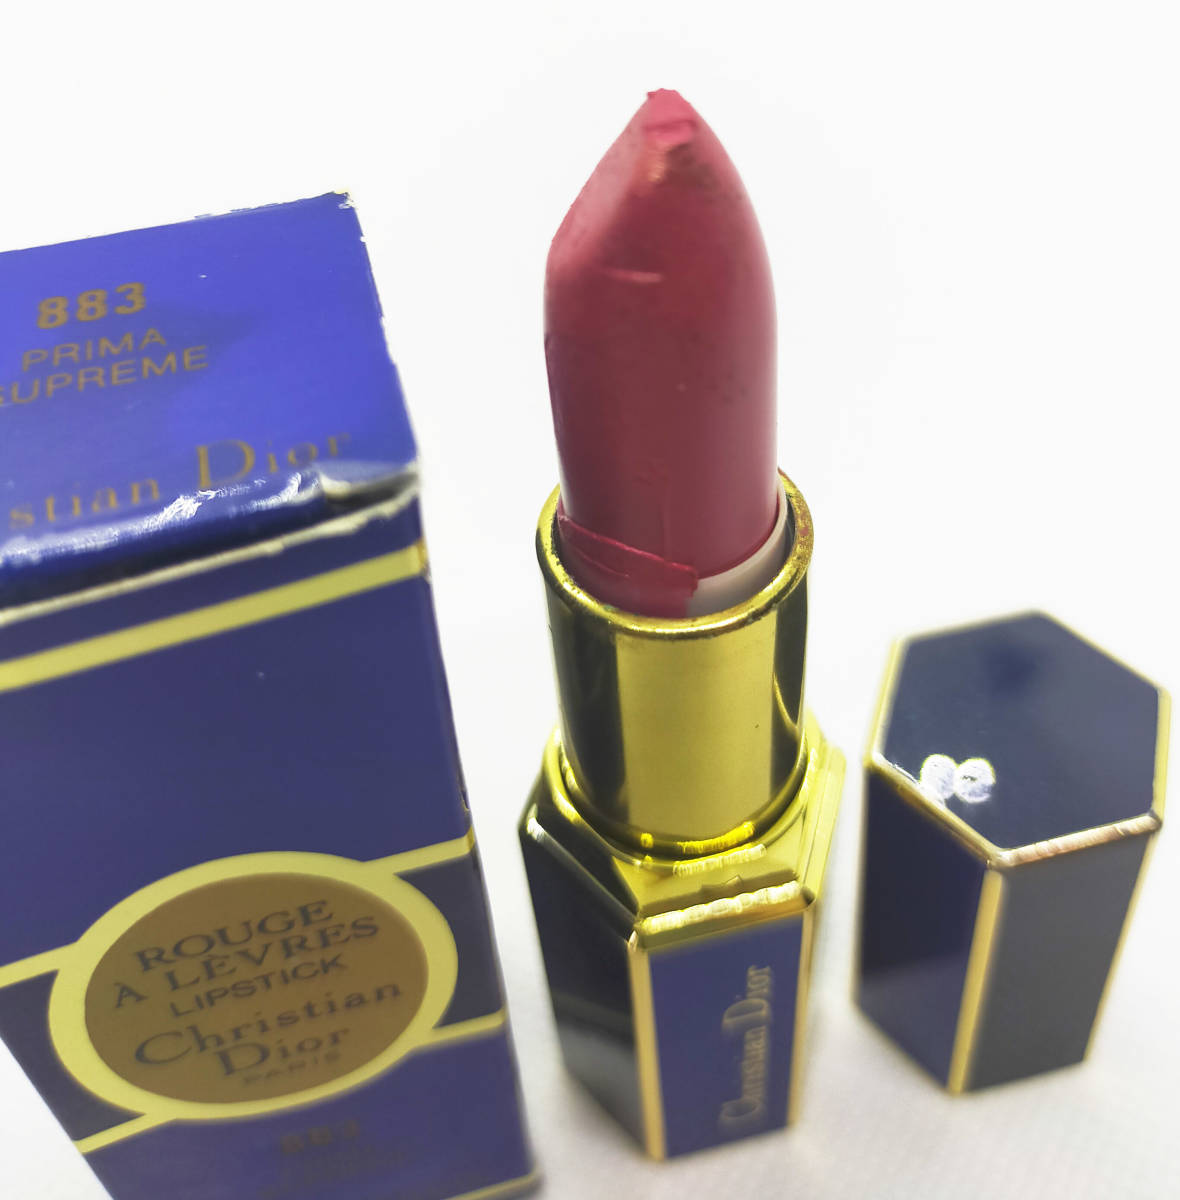 DIOR Christian Dior rouge are-vuru#883 PRIMA SUPREME lipstick 3.5g * remainder amount enough postage 220 jpy 